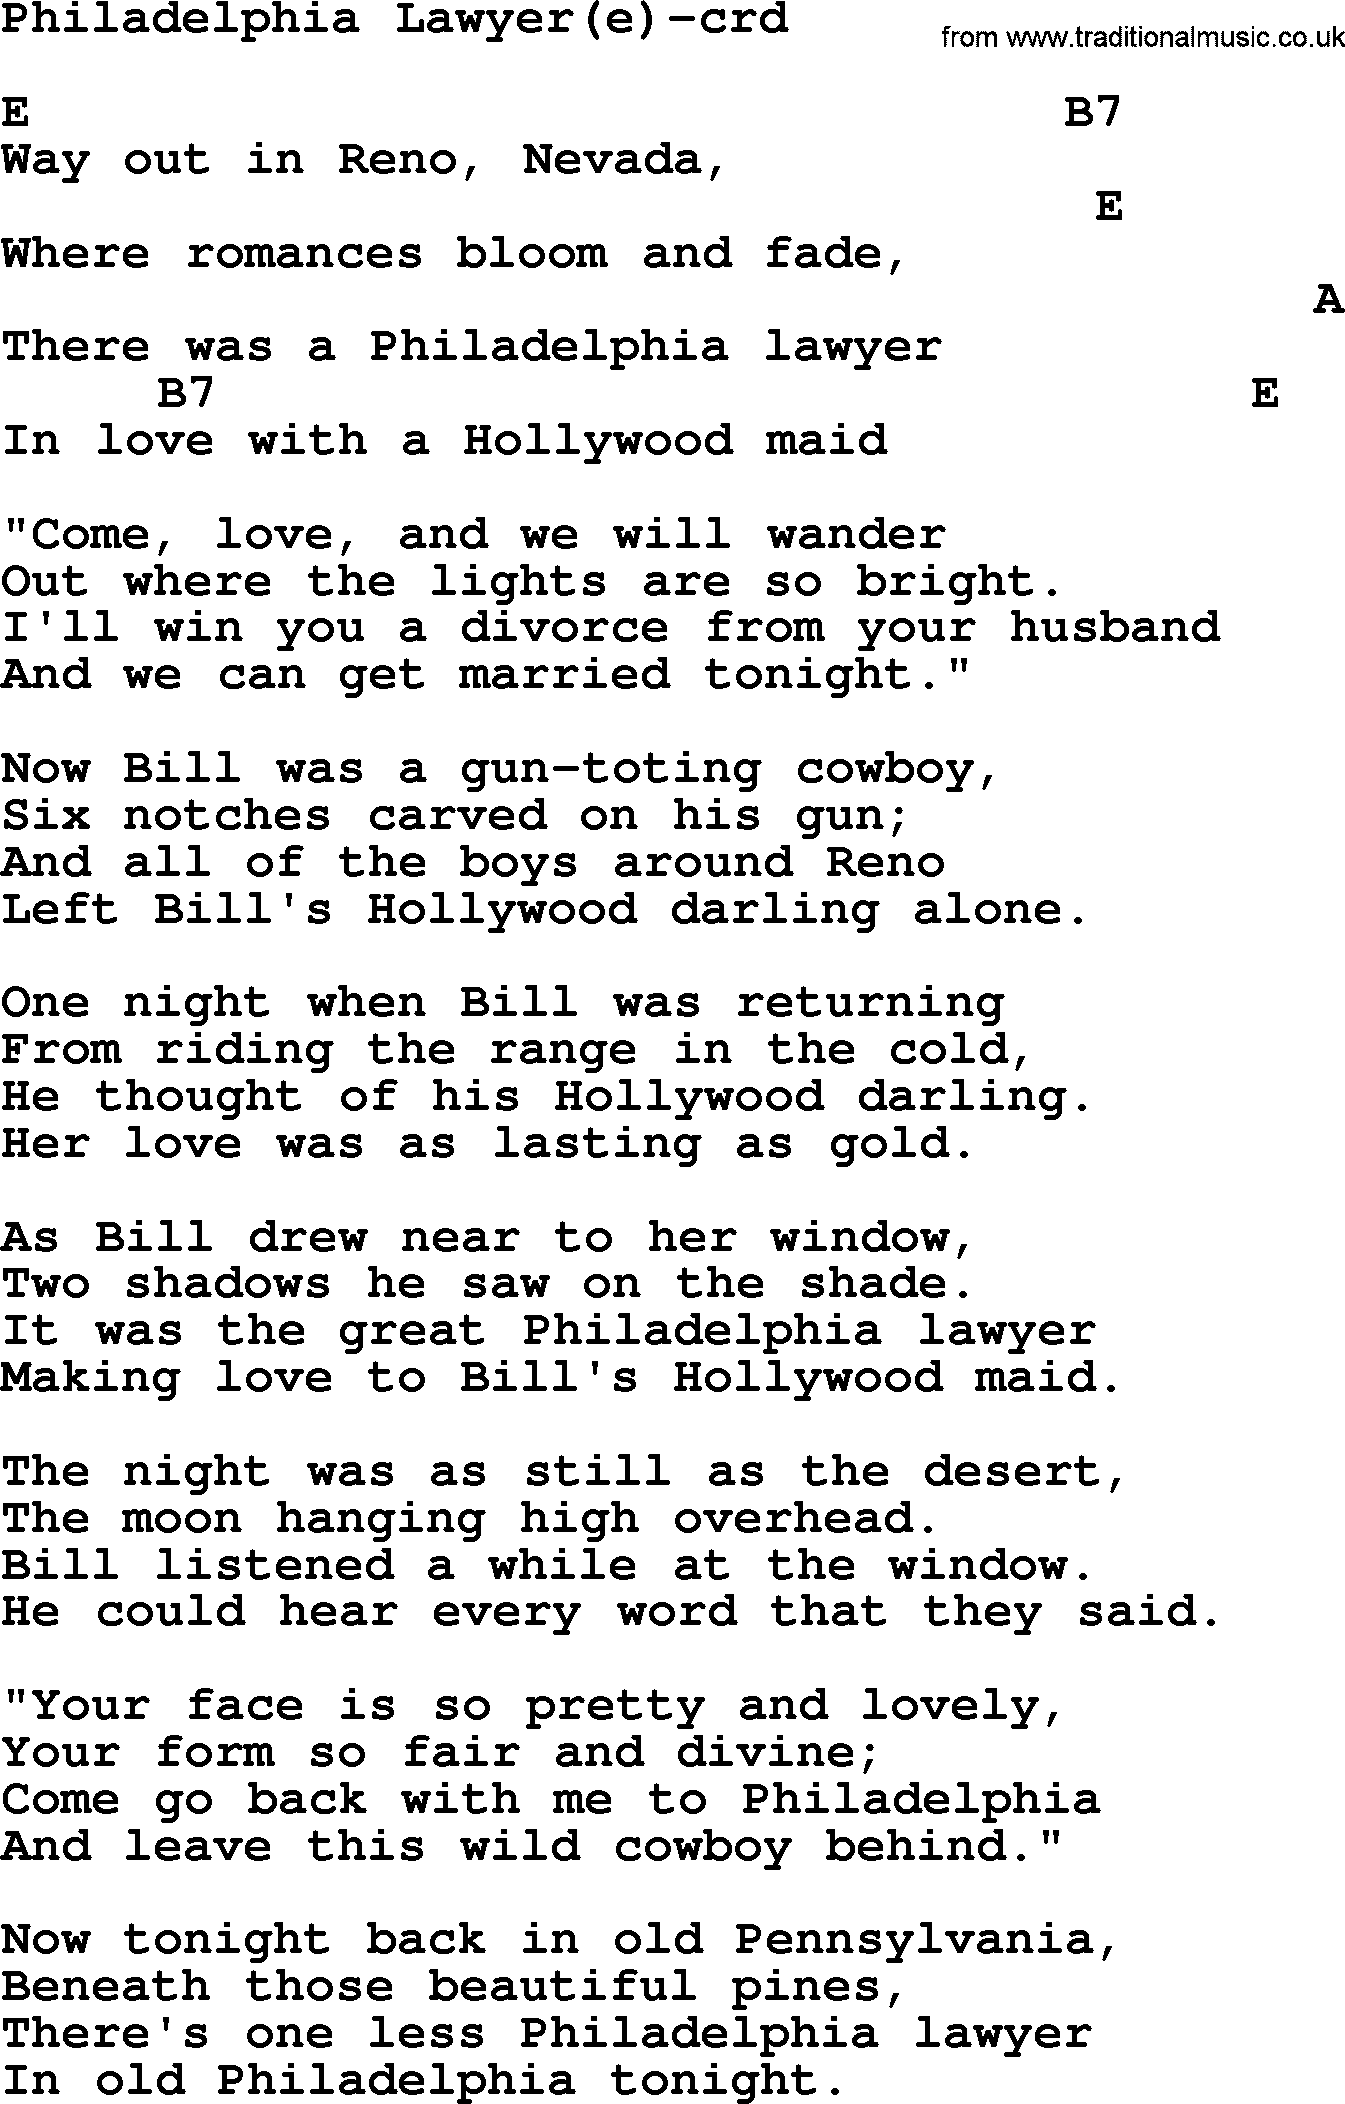 Woody Guthrie song Philadelphia Lawyer(e) lyrics and chords